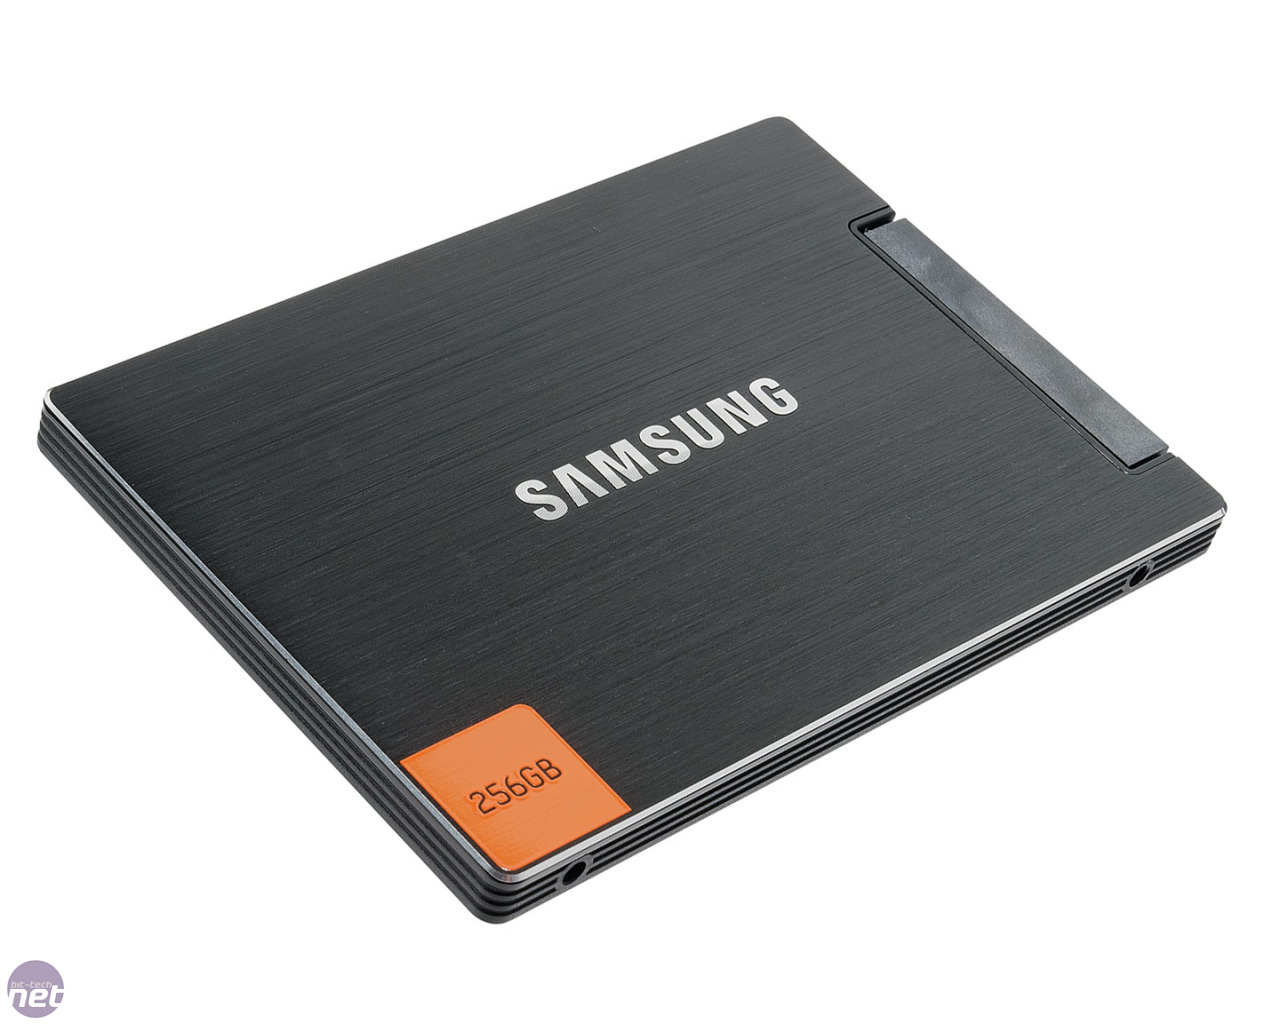 Samsung Ssd 830 Series Sale Online, 56% OFF | www.ingeniovirtual.com